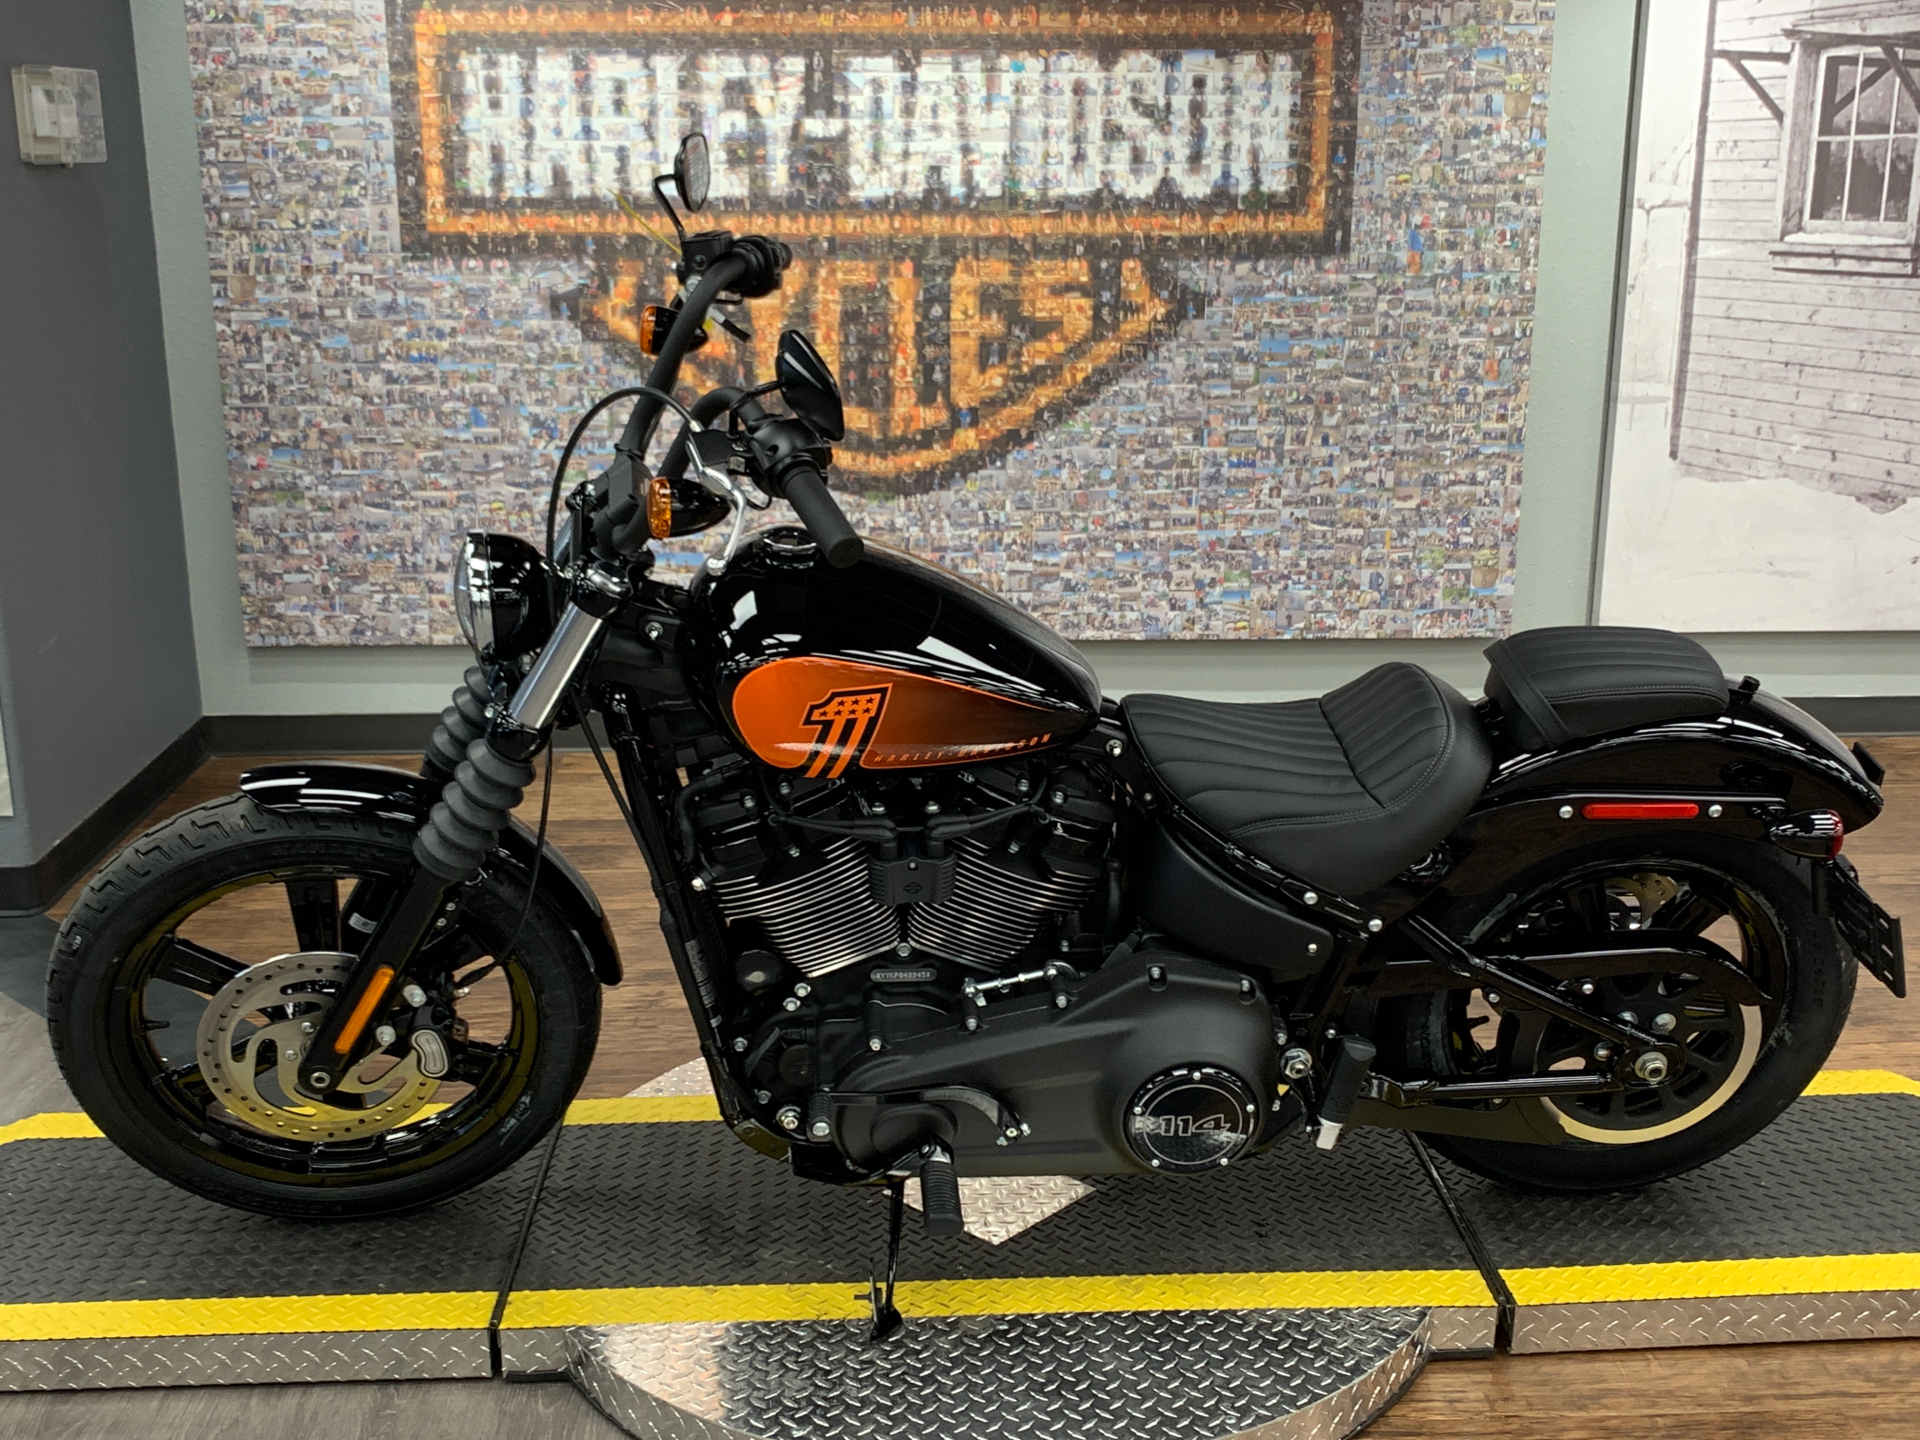 2023 Harley-Davidson Street Bob® 114 in Greeley, Colorado - Photo 4